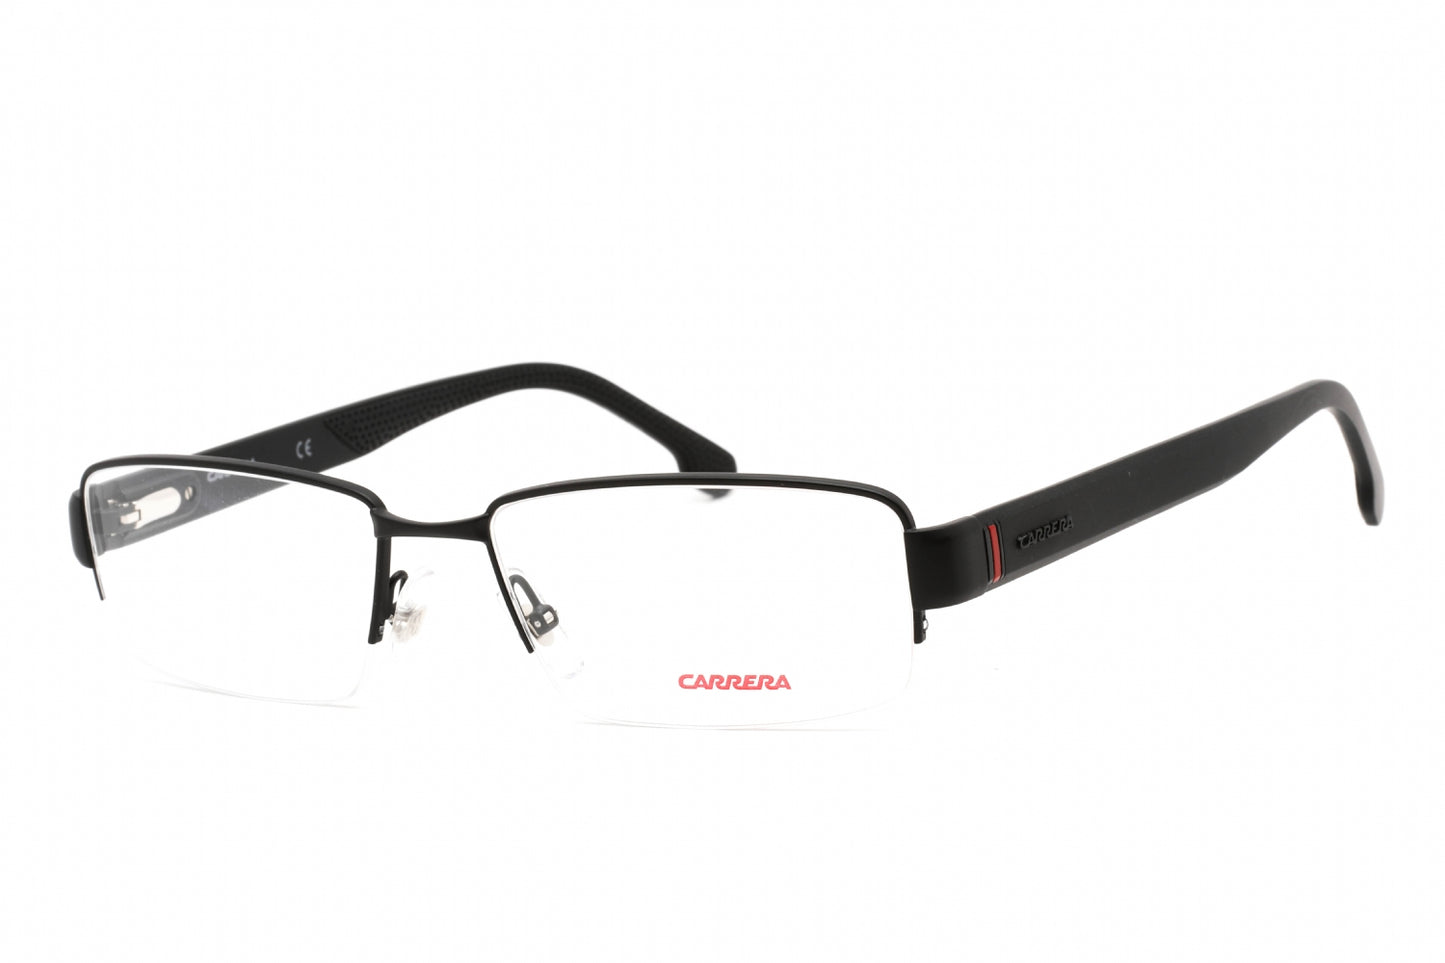 Carrera CARRERA 8850-0003 56mm New Eyeglasses